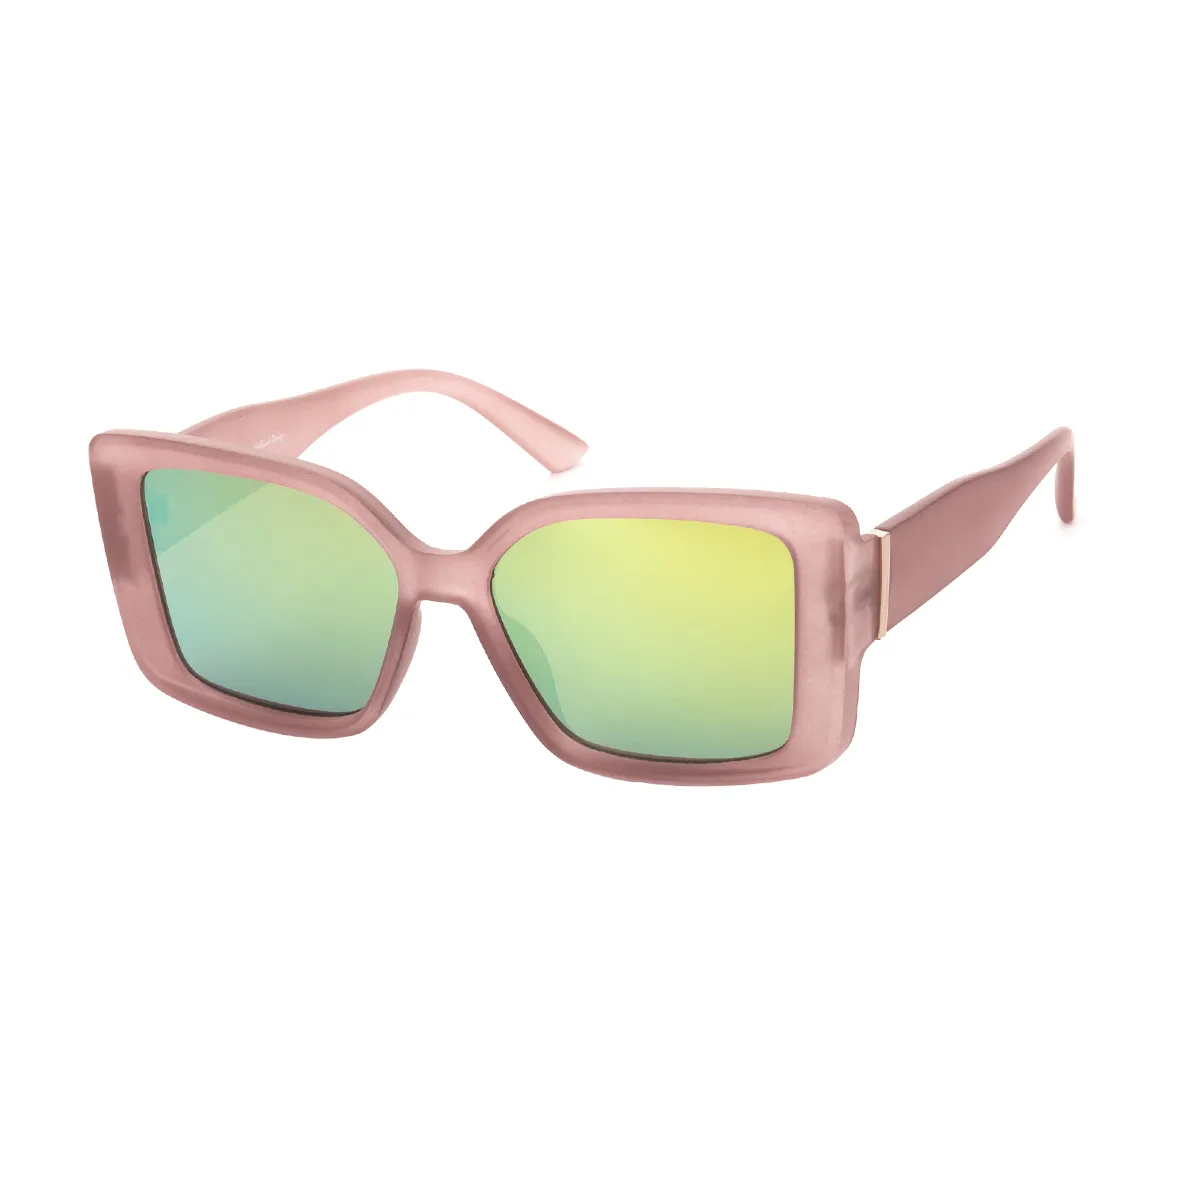 Pheebe - Square Transparent Pink Sunglasses for Women